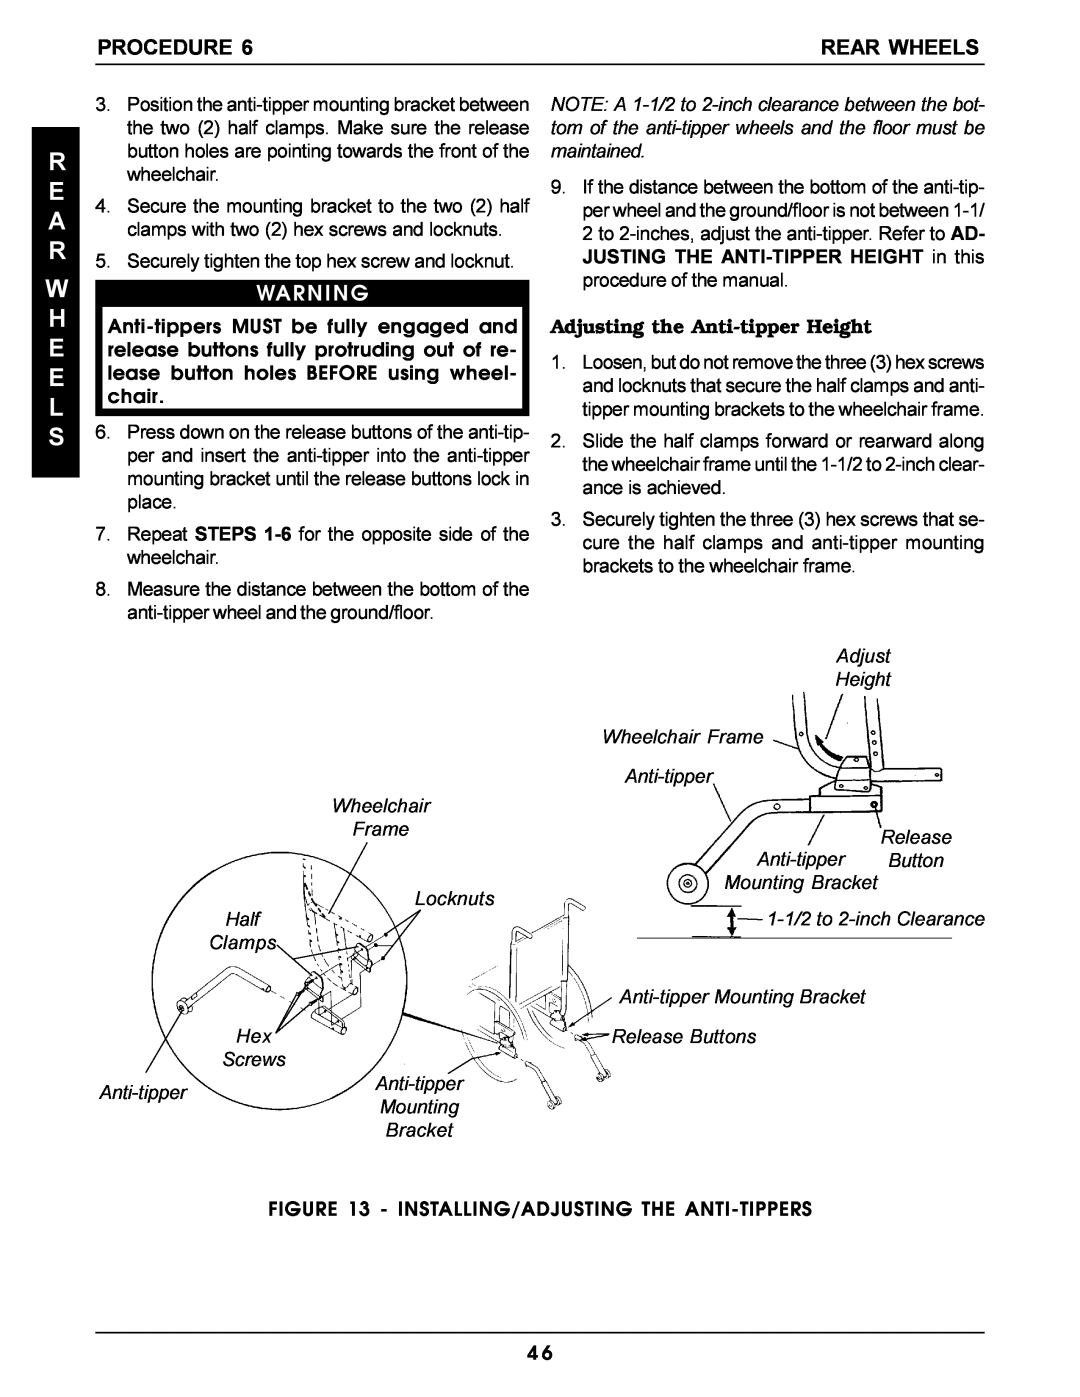 Invacare Pro Series manual Adjusting the Anti-tipper Height, R E A R W H E E L S, Procedure, Rear Wheels 